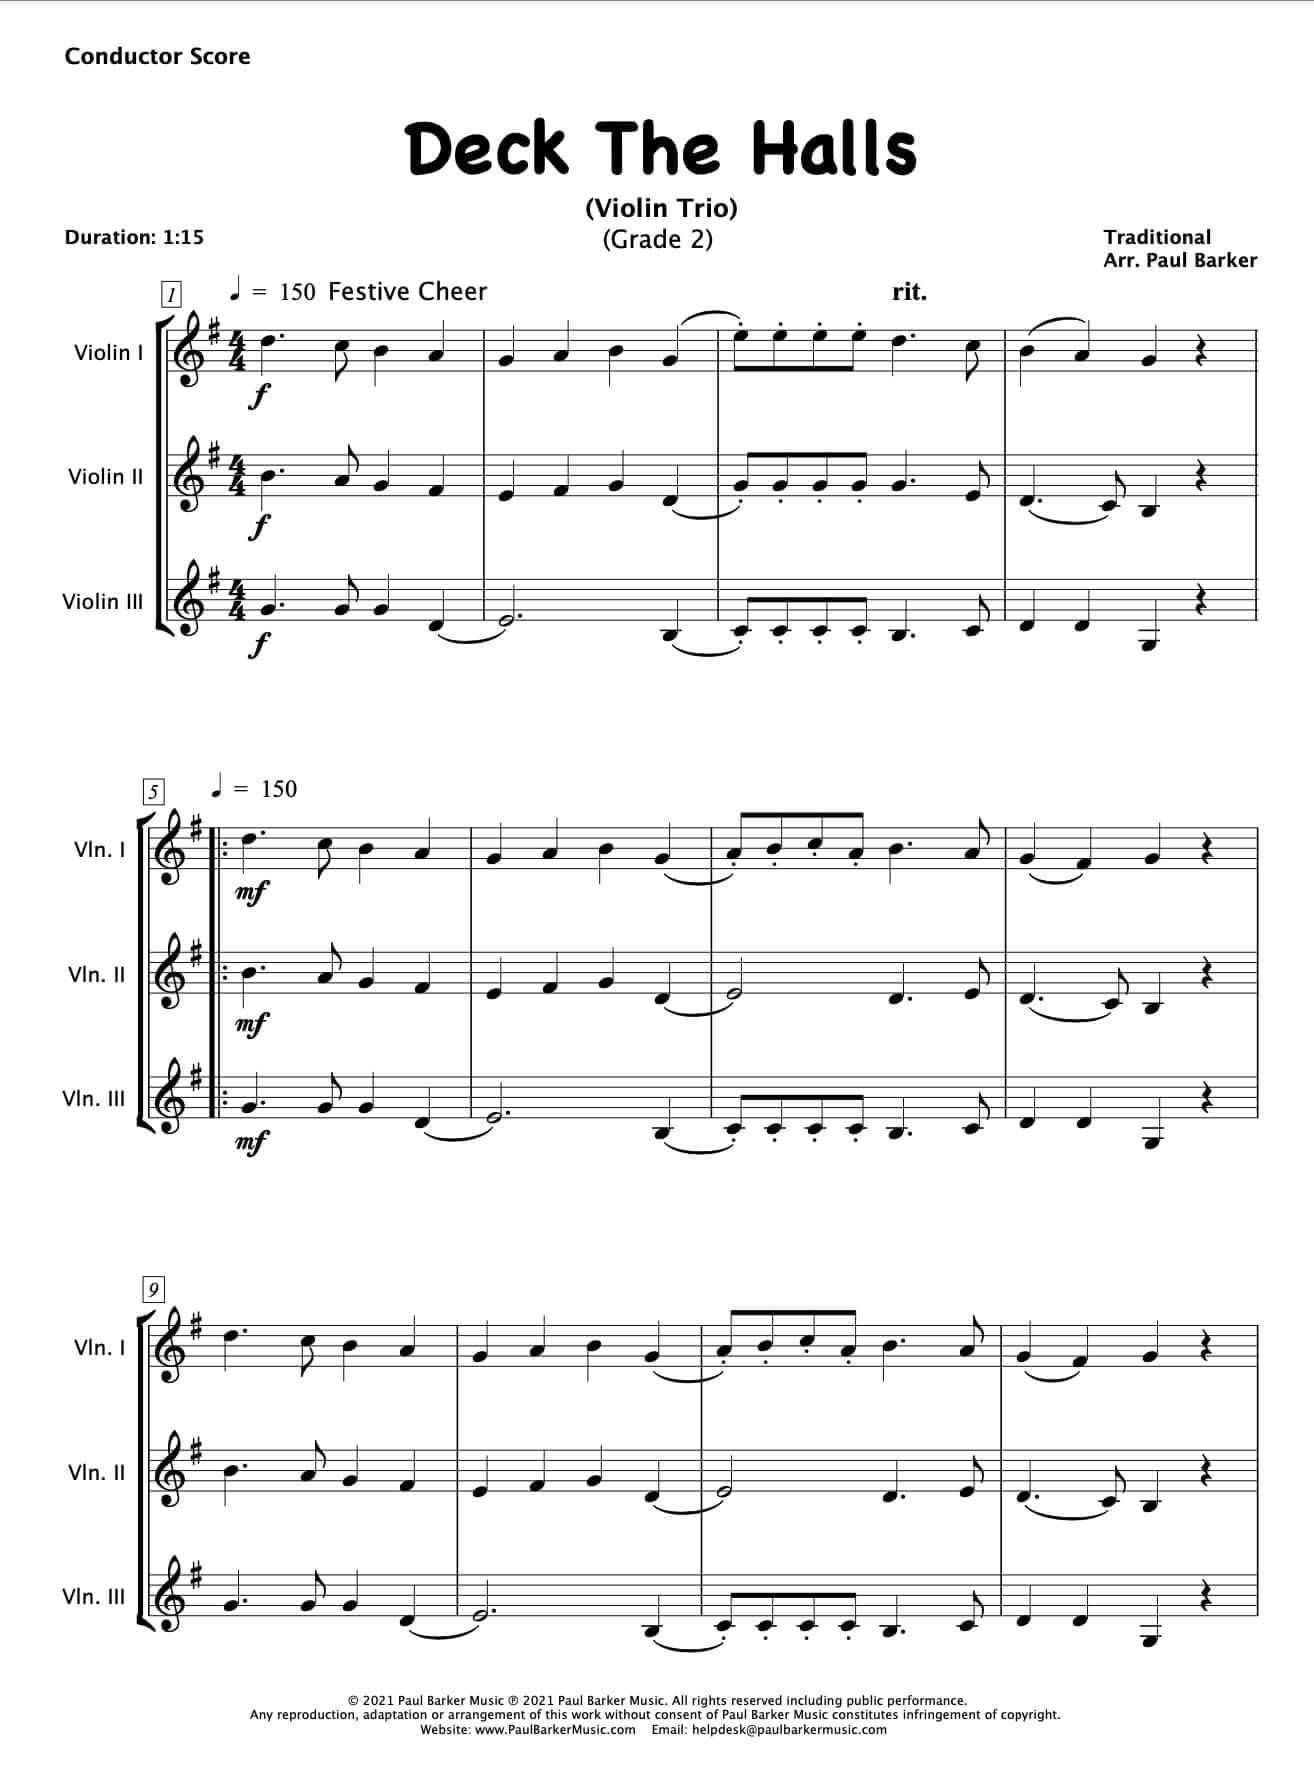 Christmas Violin Trios - book 1 - Paul Barker Music 